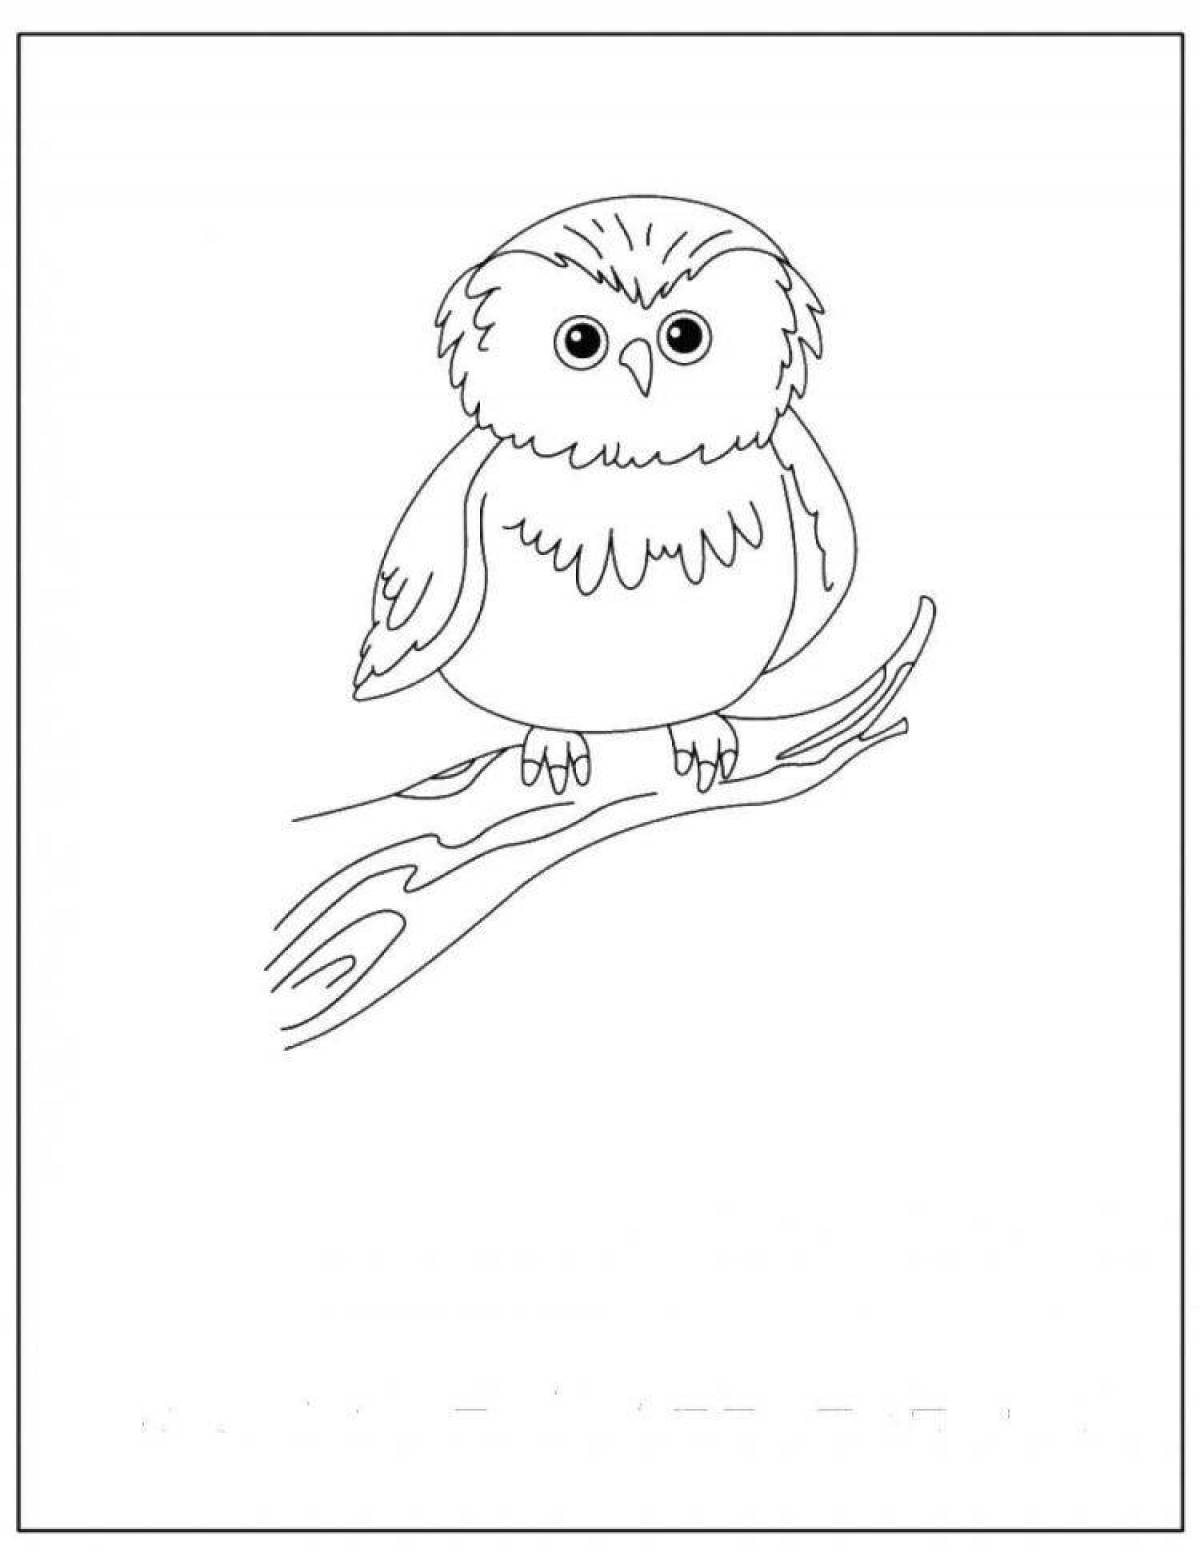 Violent snowy owl coloring book